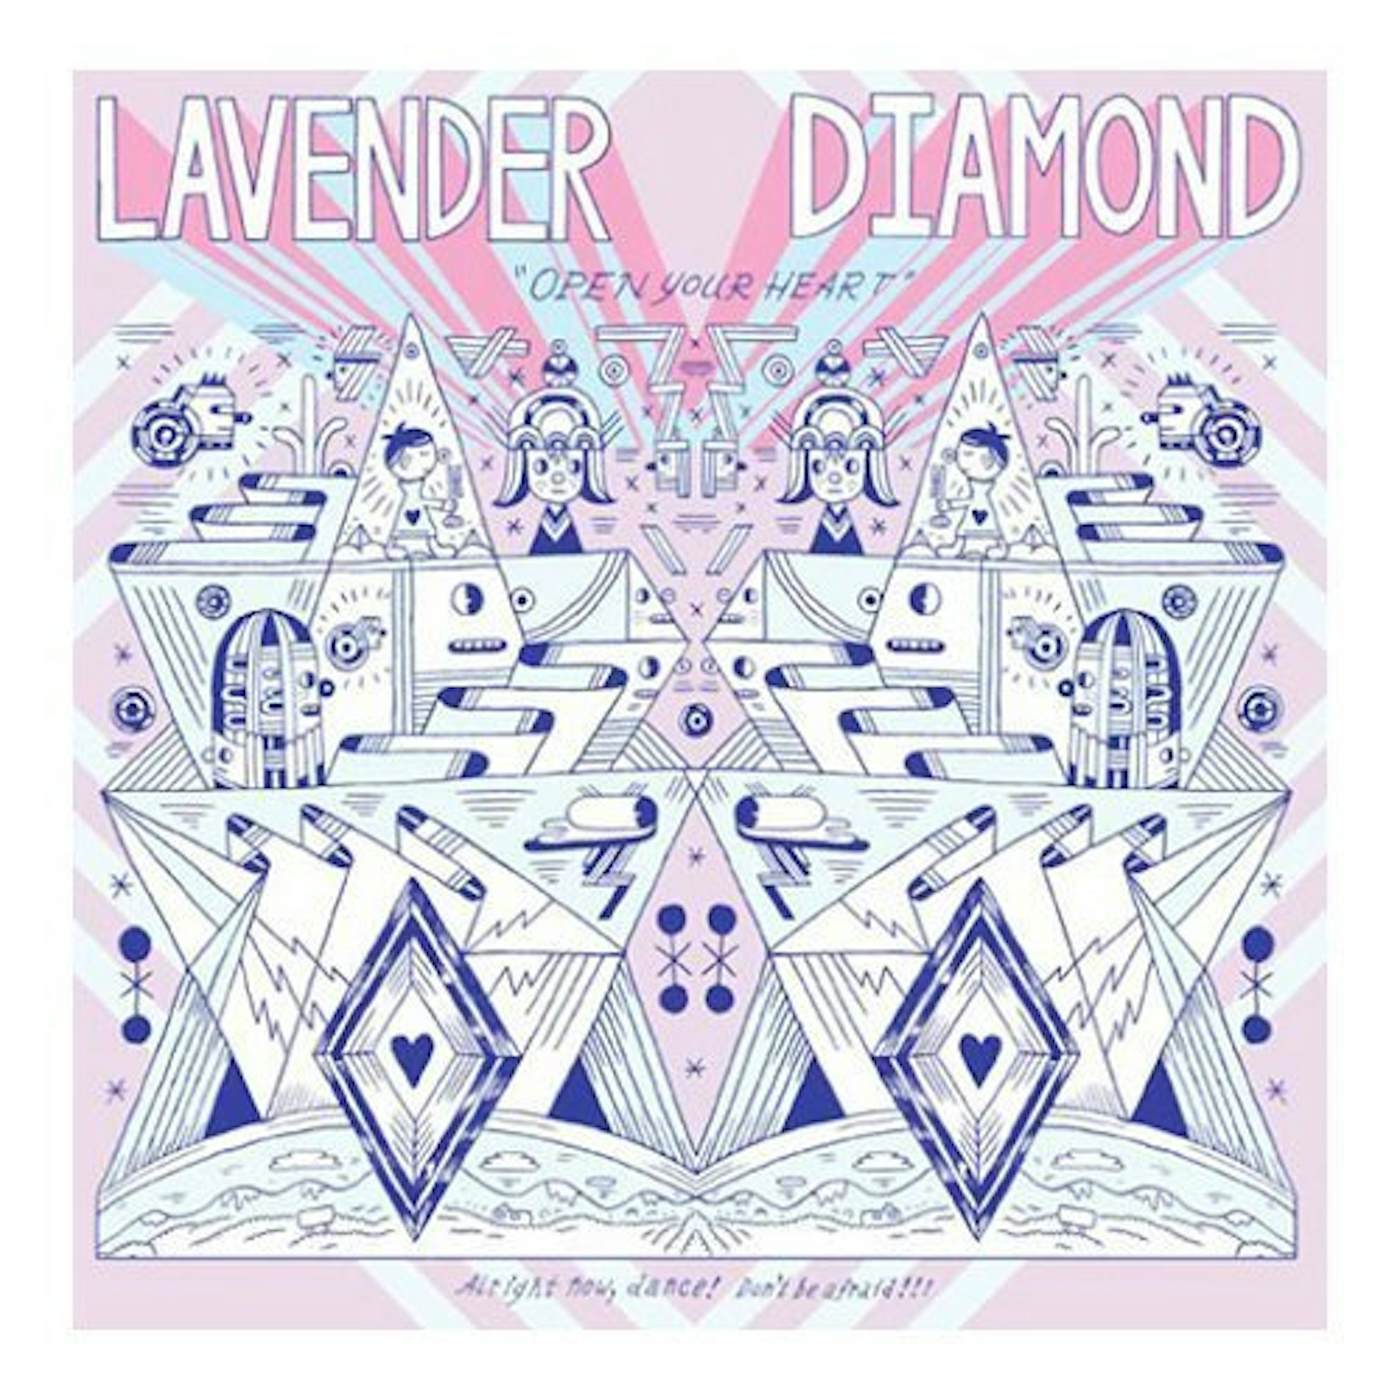 Lavender Diamond Open Your Heart Vinyl Record